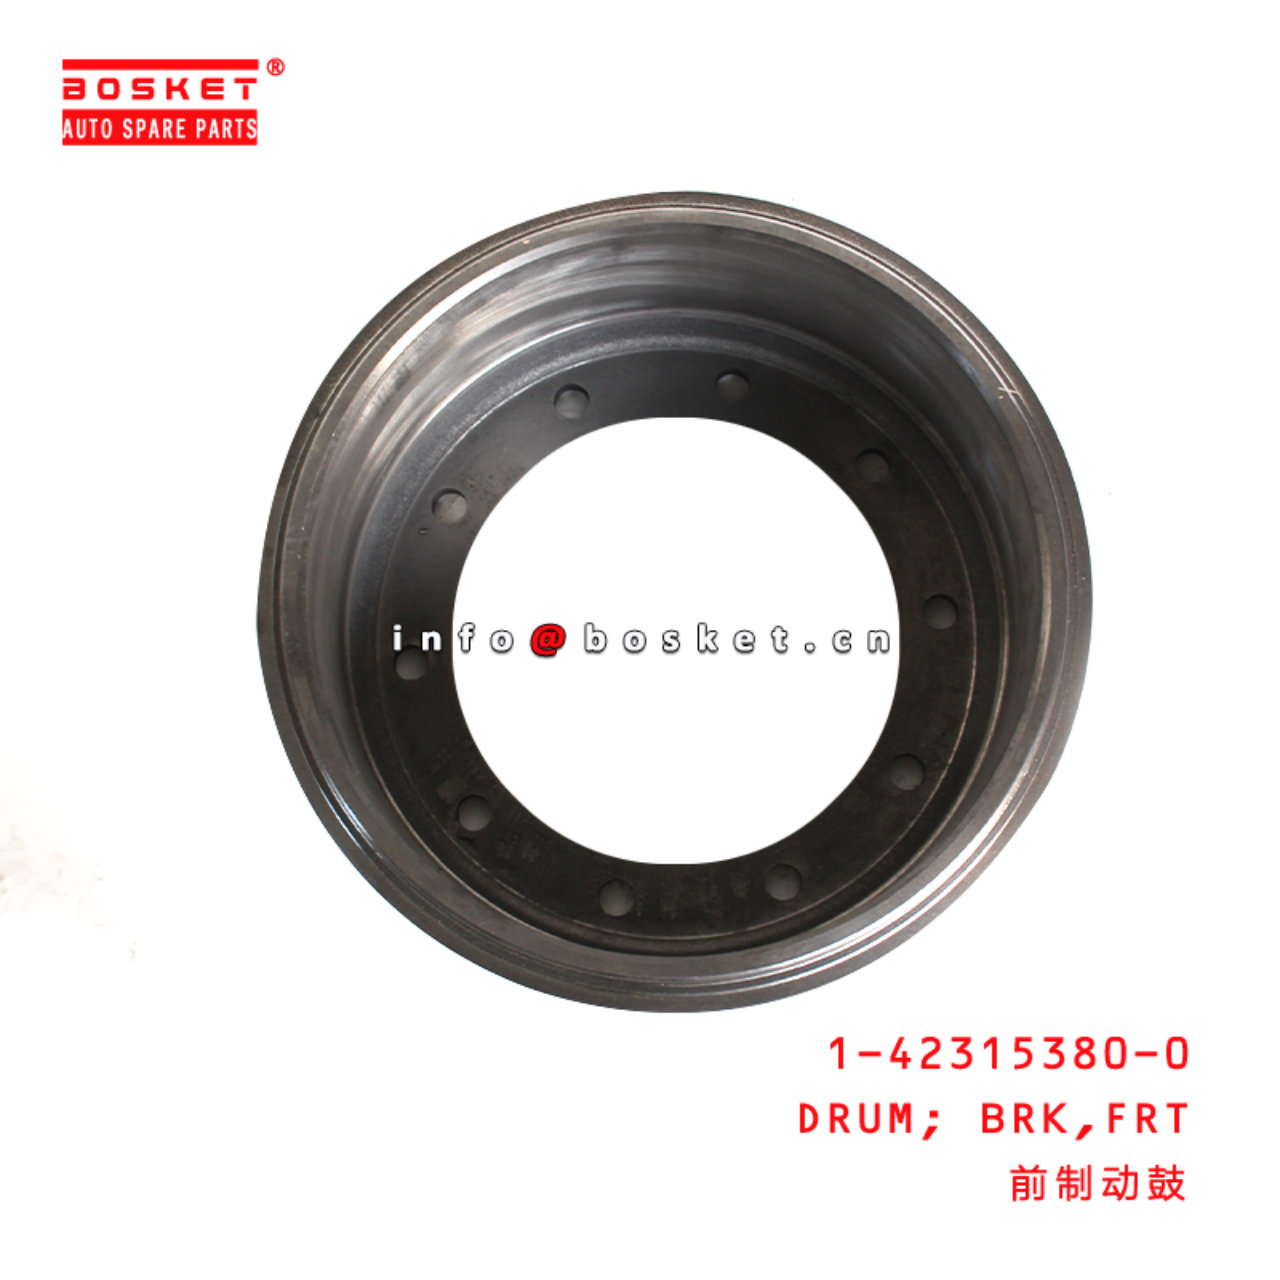 1-42315380-0 Front Brake Drum Suitable for ISUZU VC46 1423153800